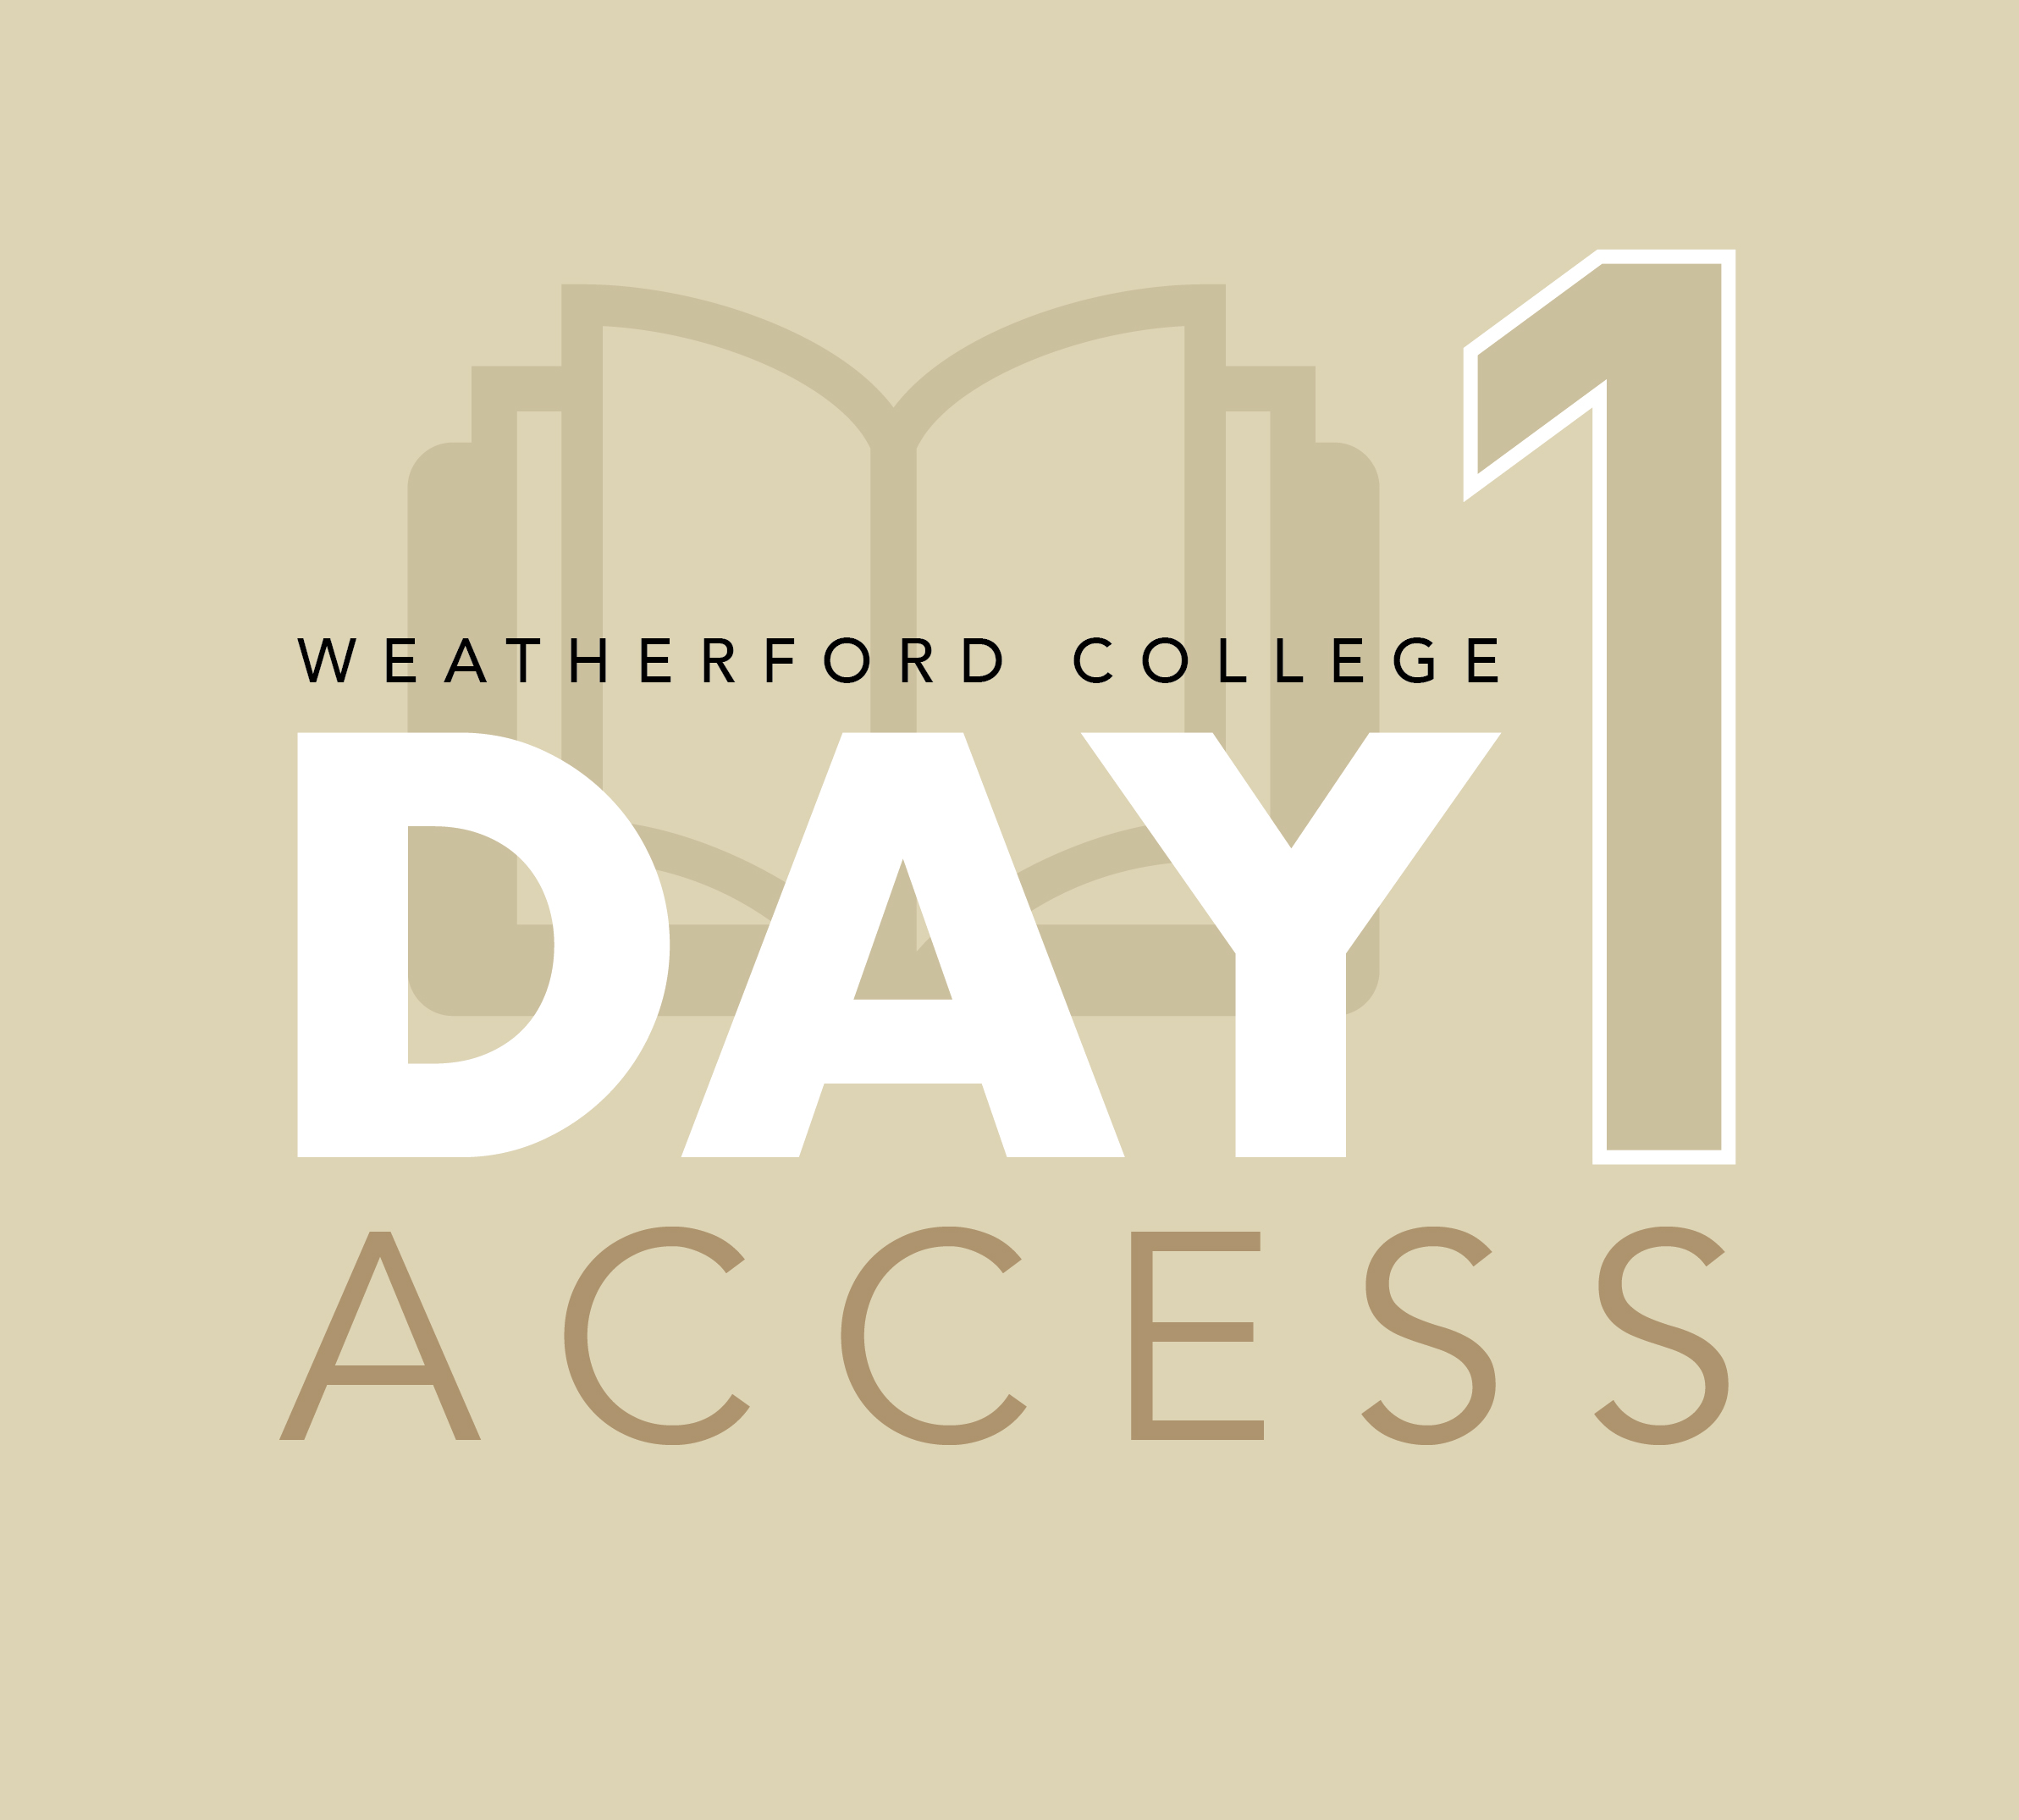 Day 1 Access logo